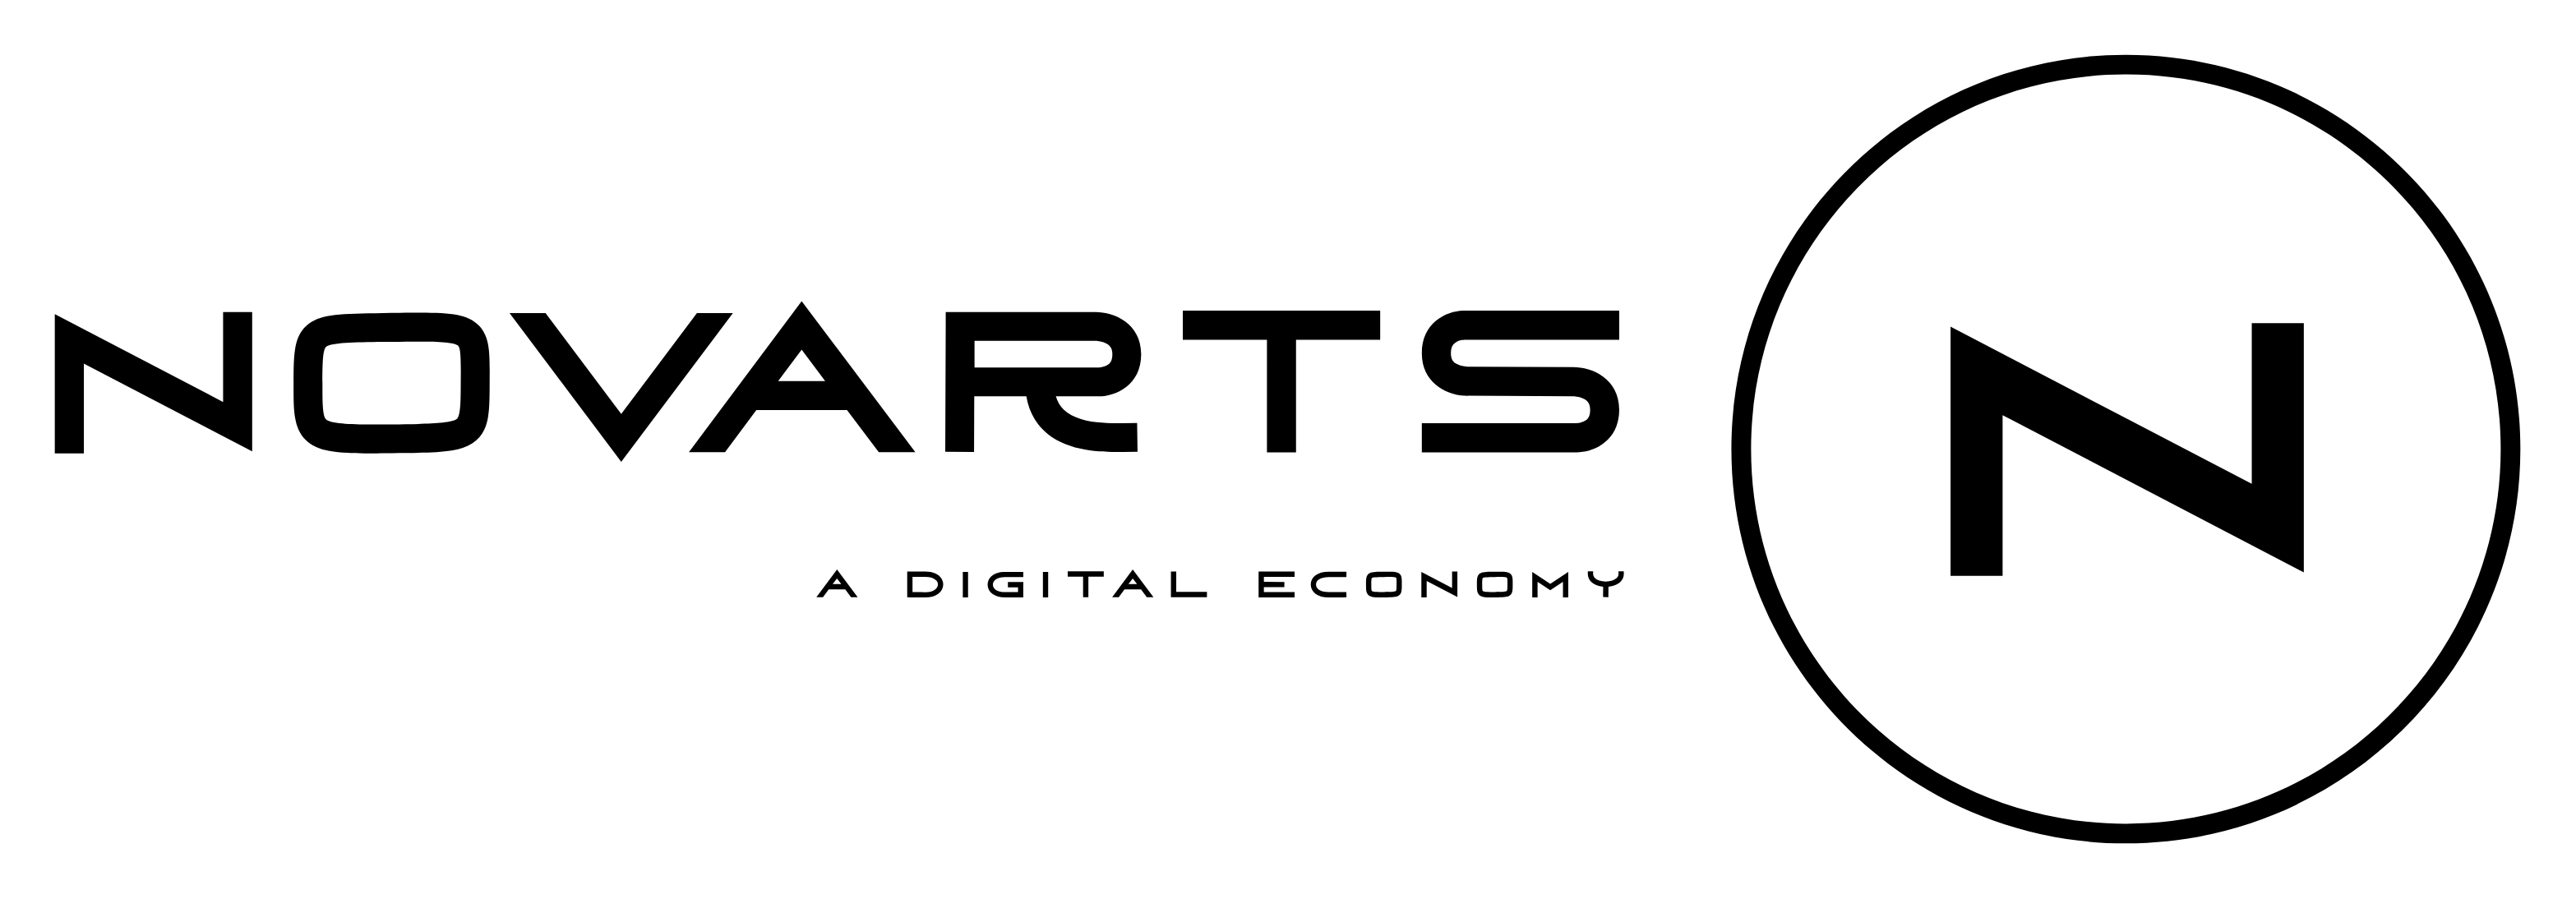 nft-logo